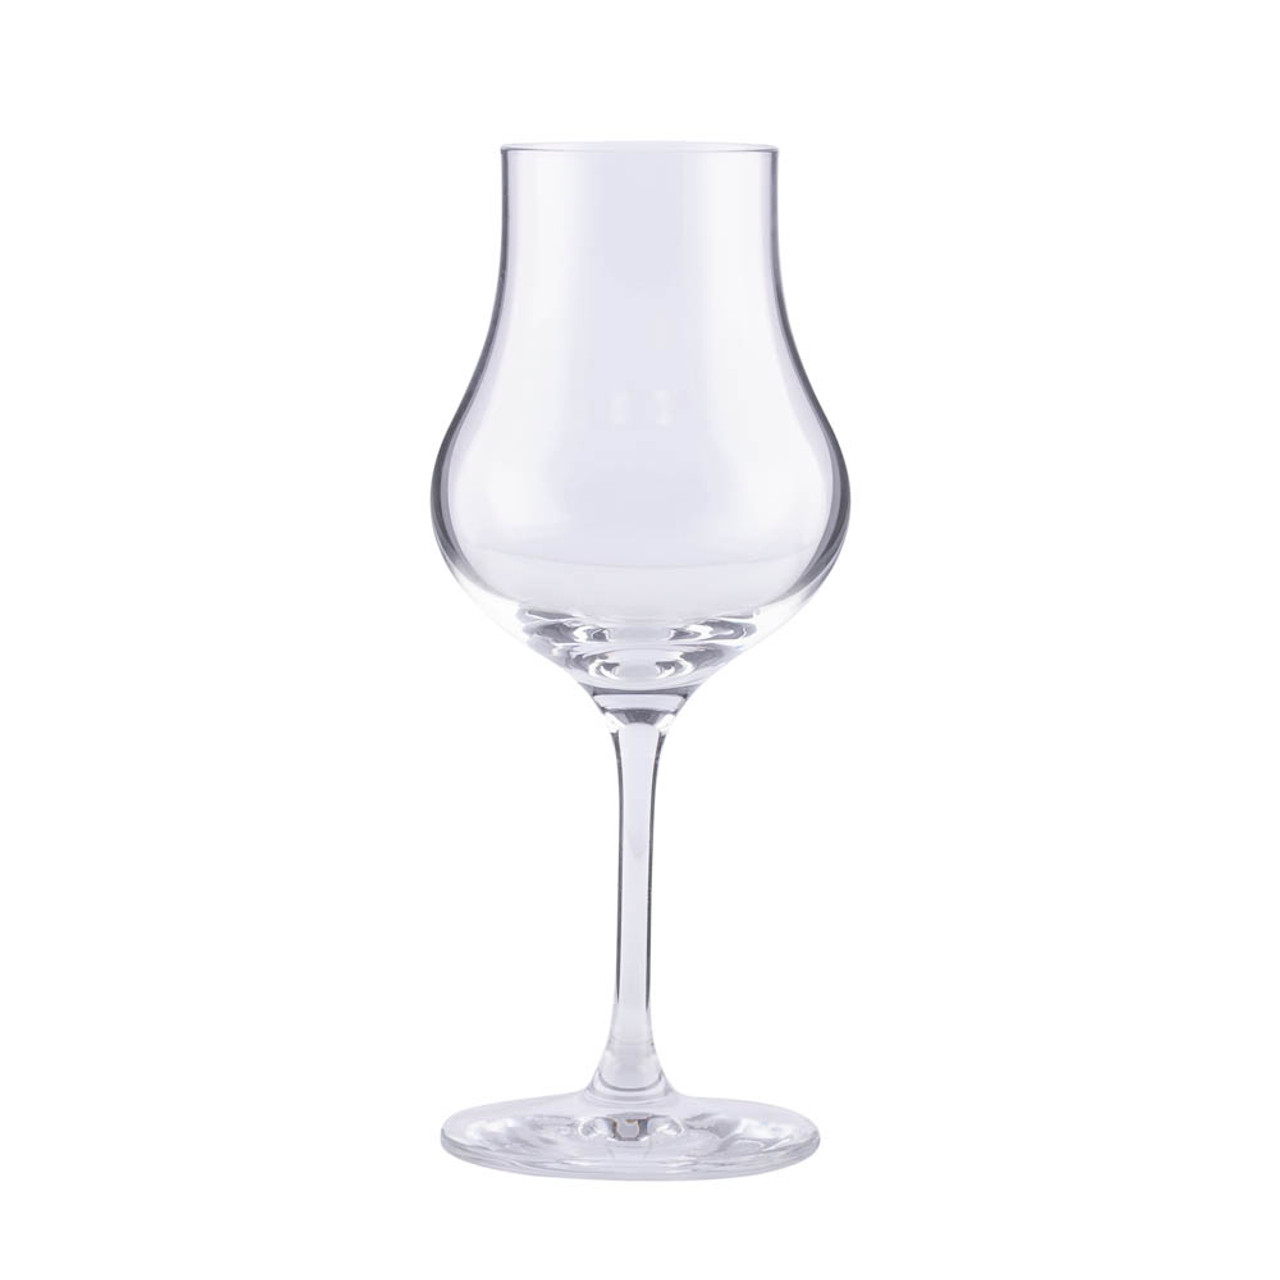 ninesung Whiskey Glasses Set of 4, Bourbon Glass, Old Fashioned Glasses,  11.5 Oz Short Stem Wine Gla…See more ninesung Whiskey Glasses Set of 4